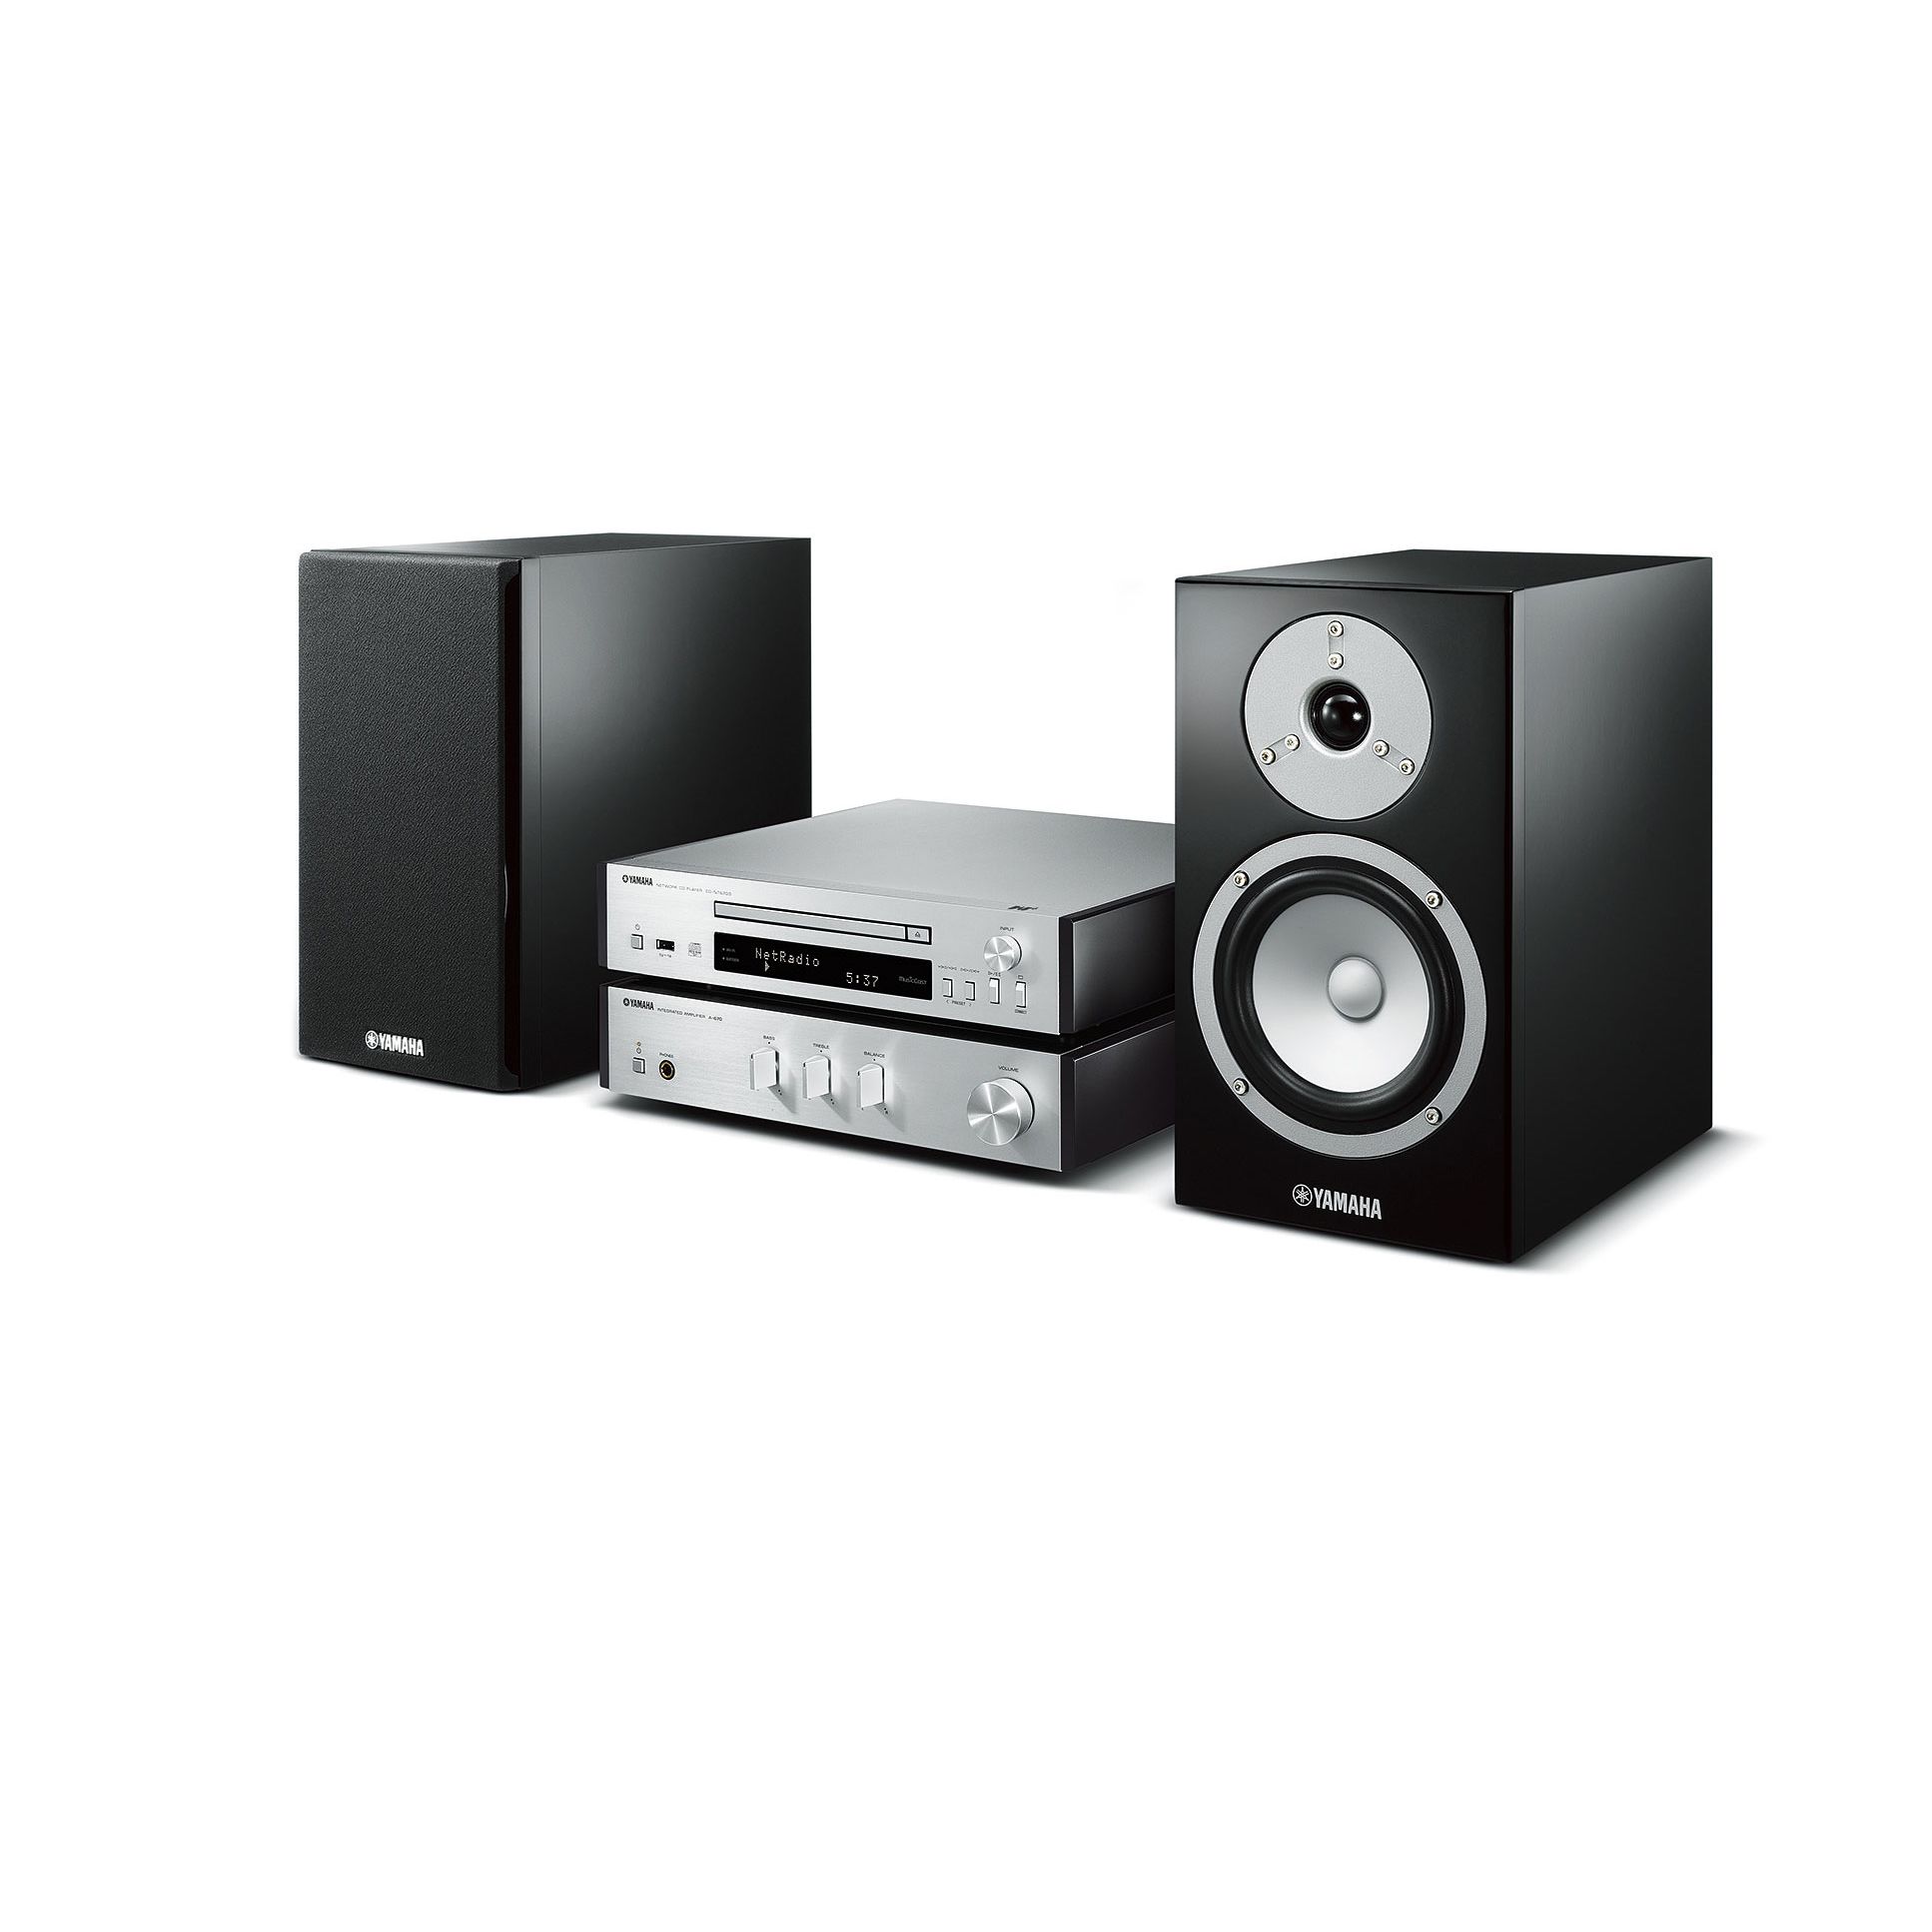 MCR-N670D - App - HiFi Systems - Audio & Visual - Products ...